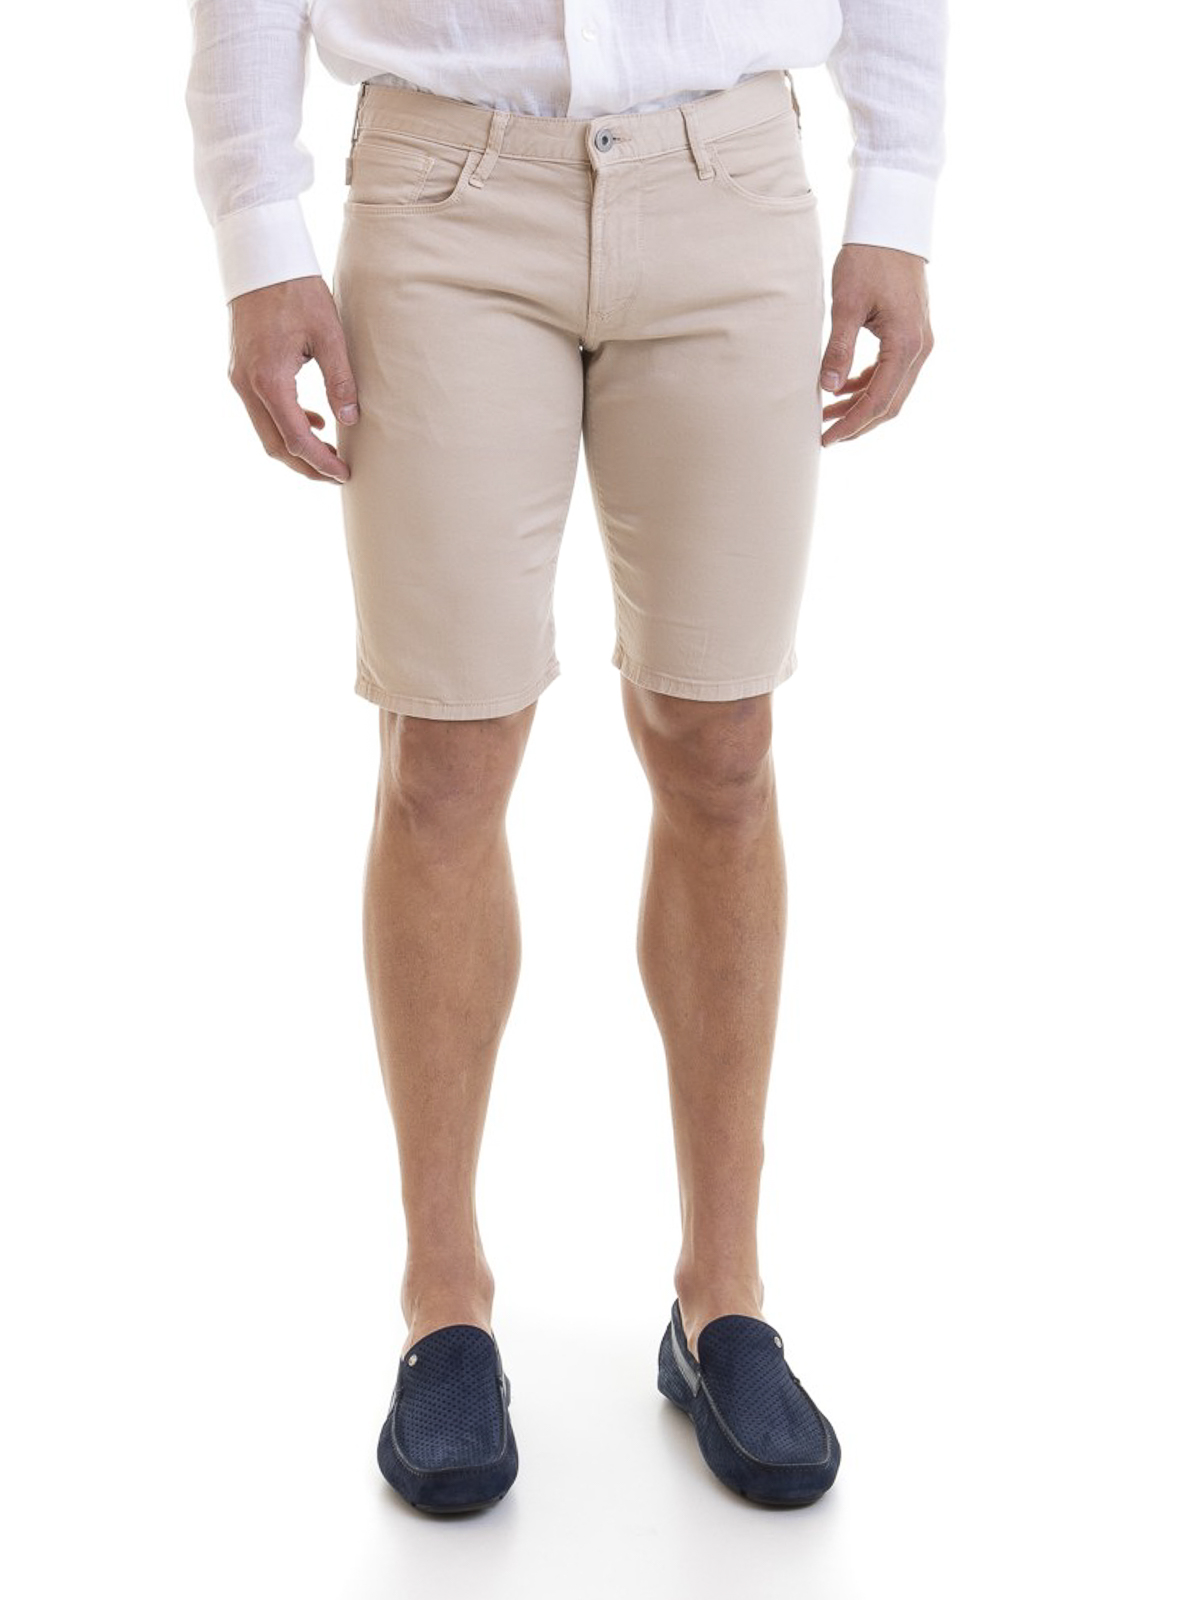 Trousers Shorts Emporio Armani - Beige cotton jeans style short ...